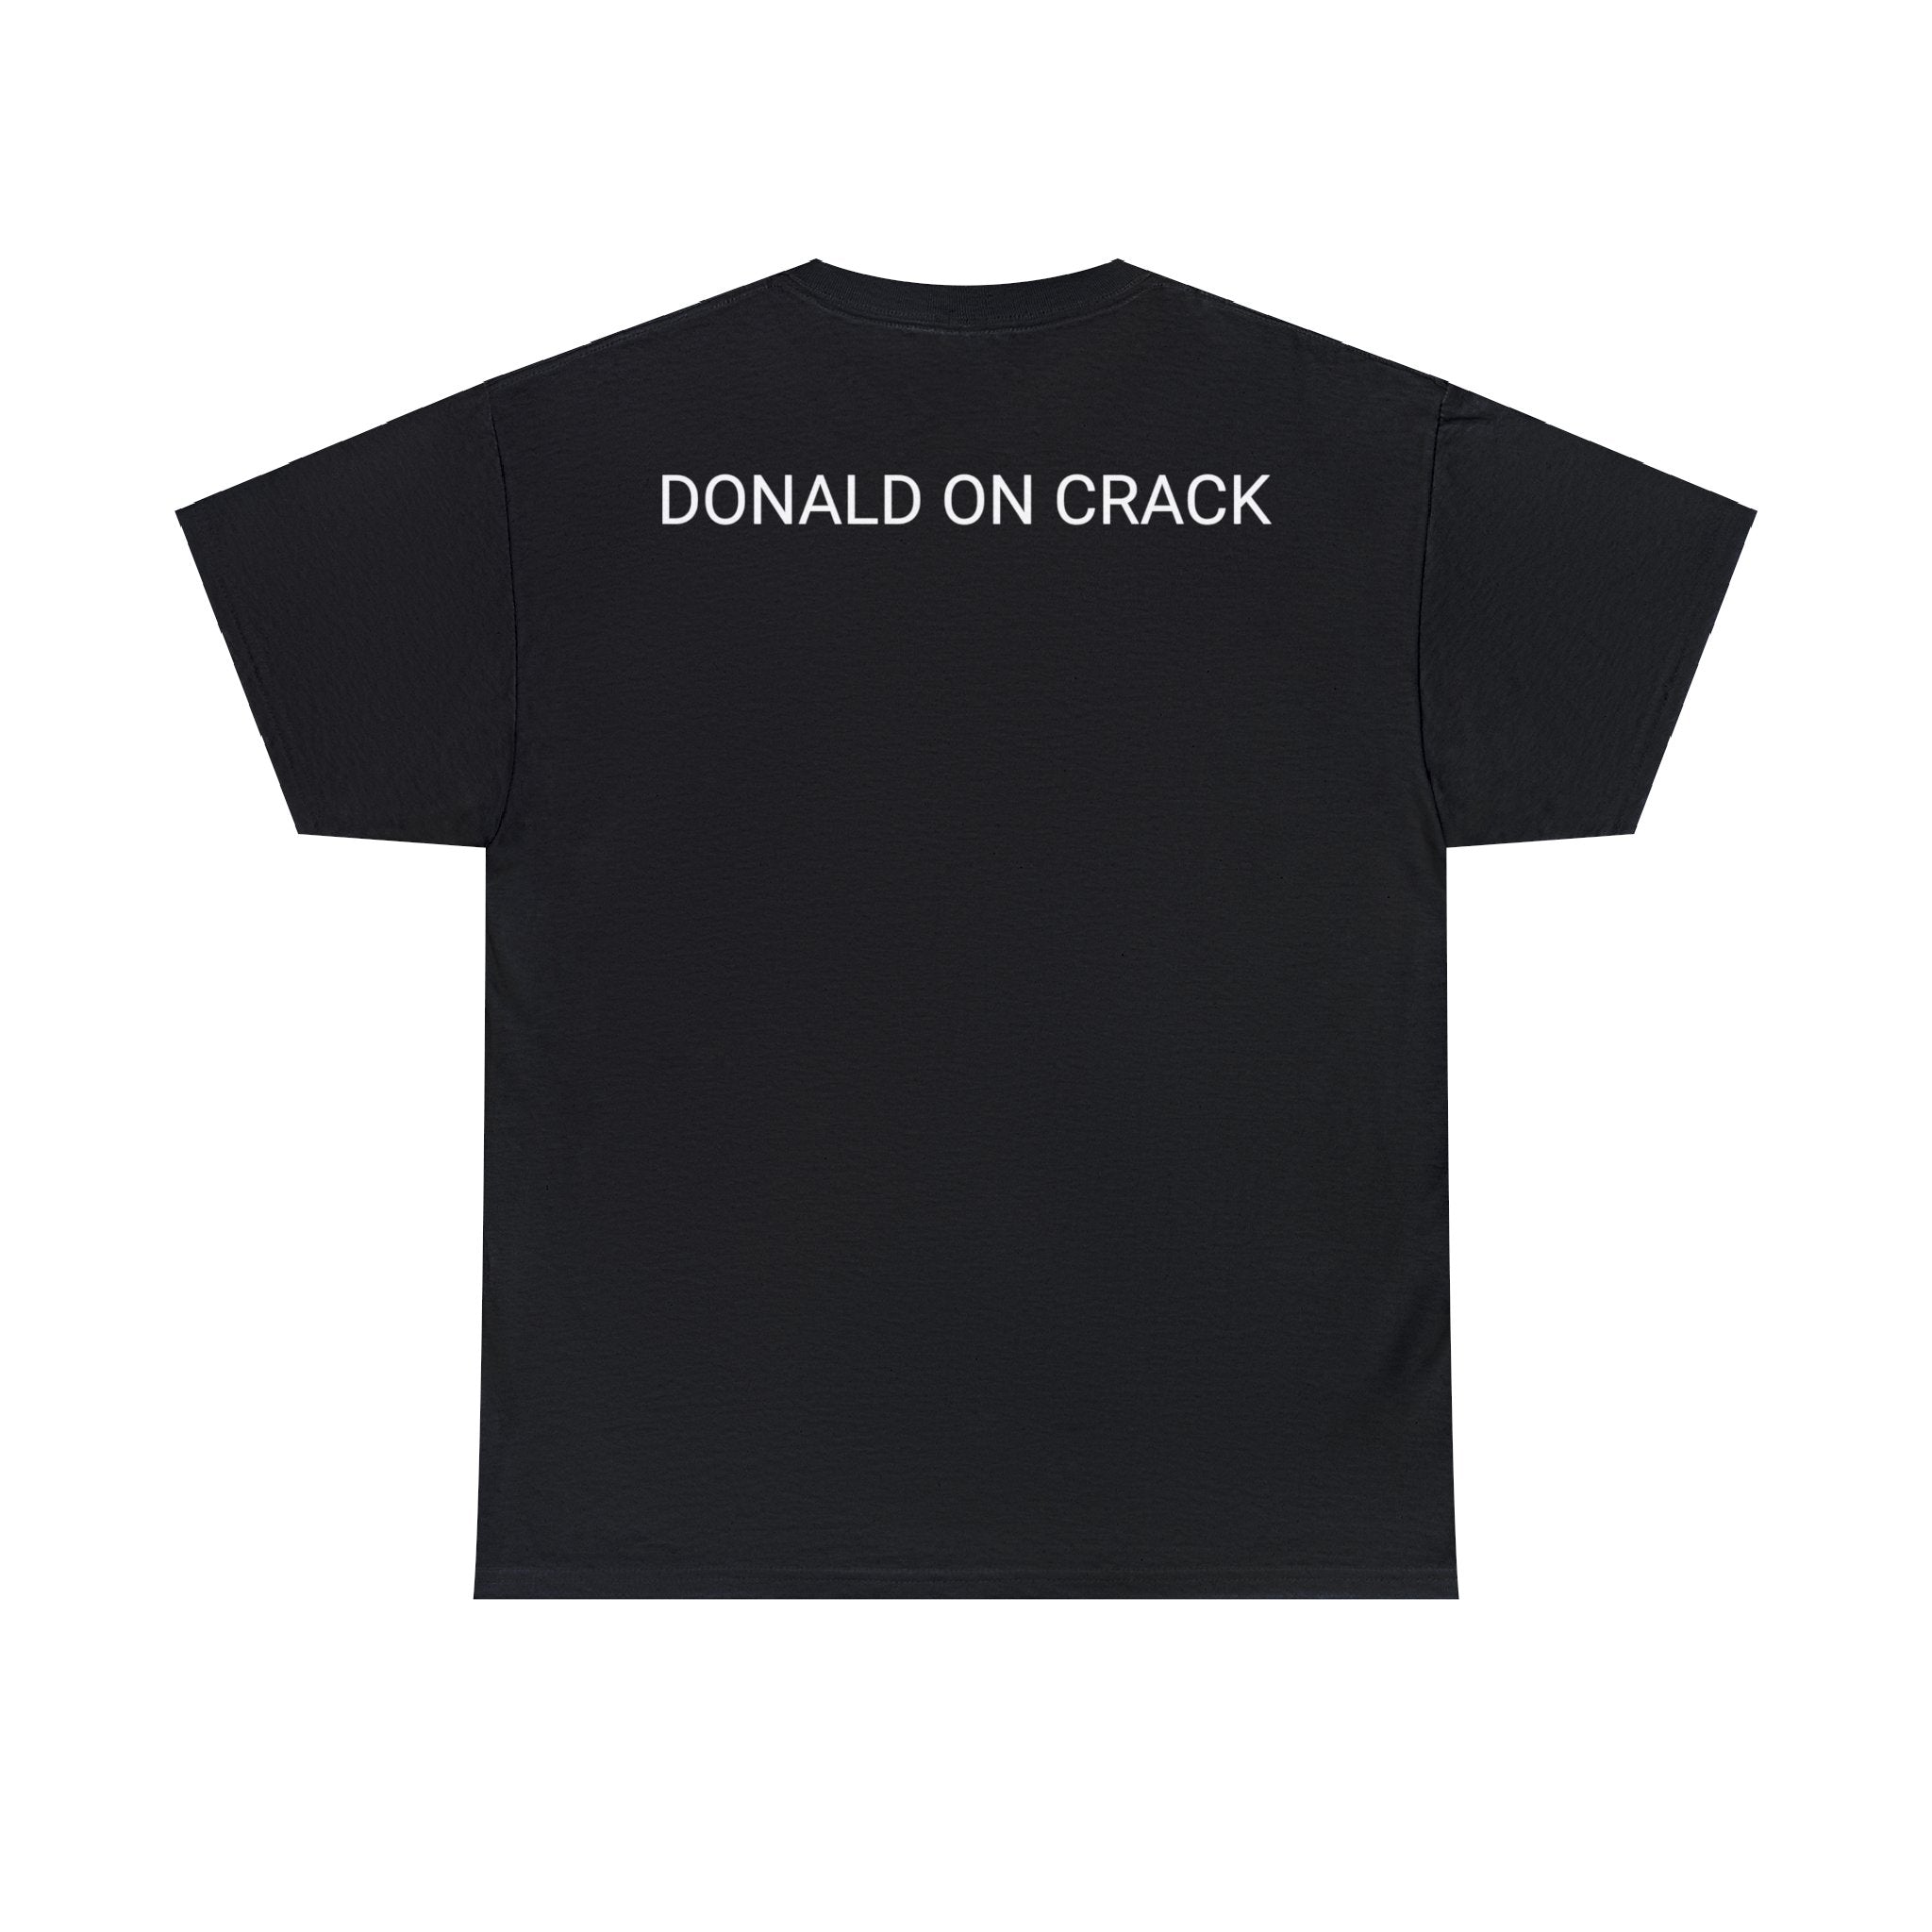 "DONALD ON CRACK" T-Shirt